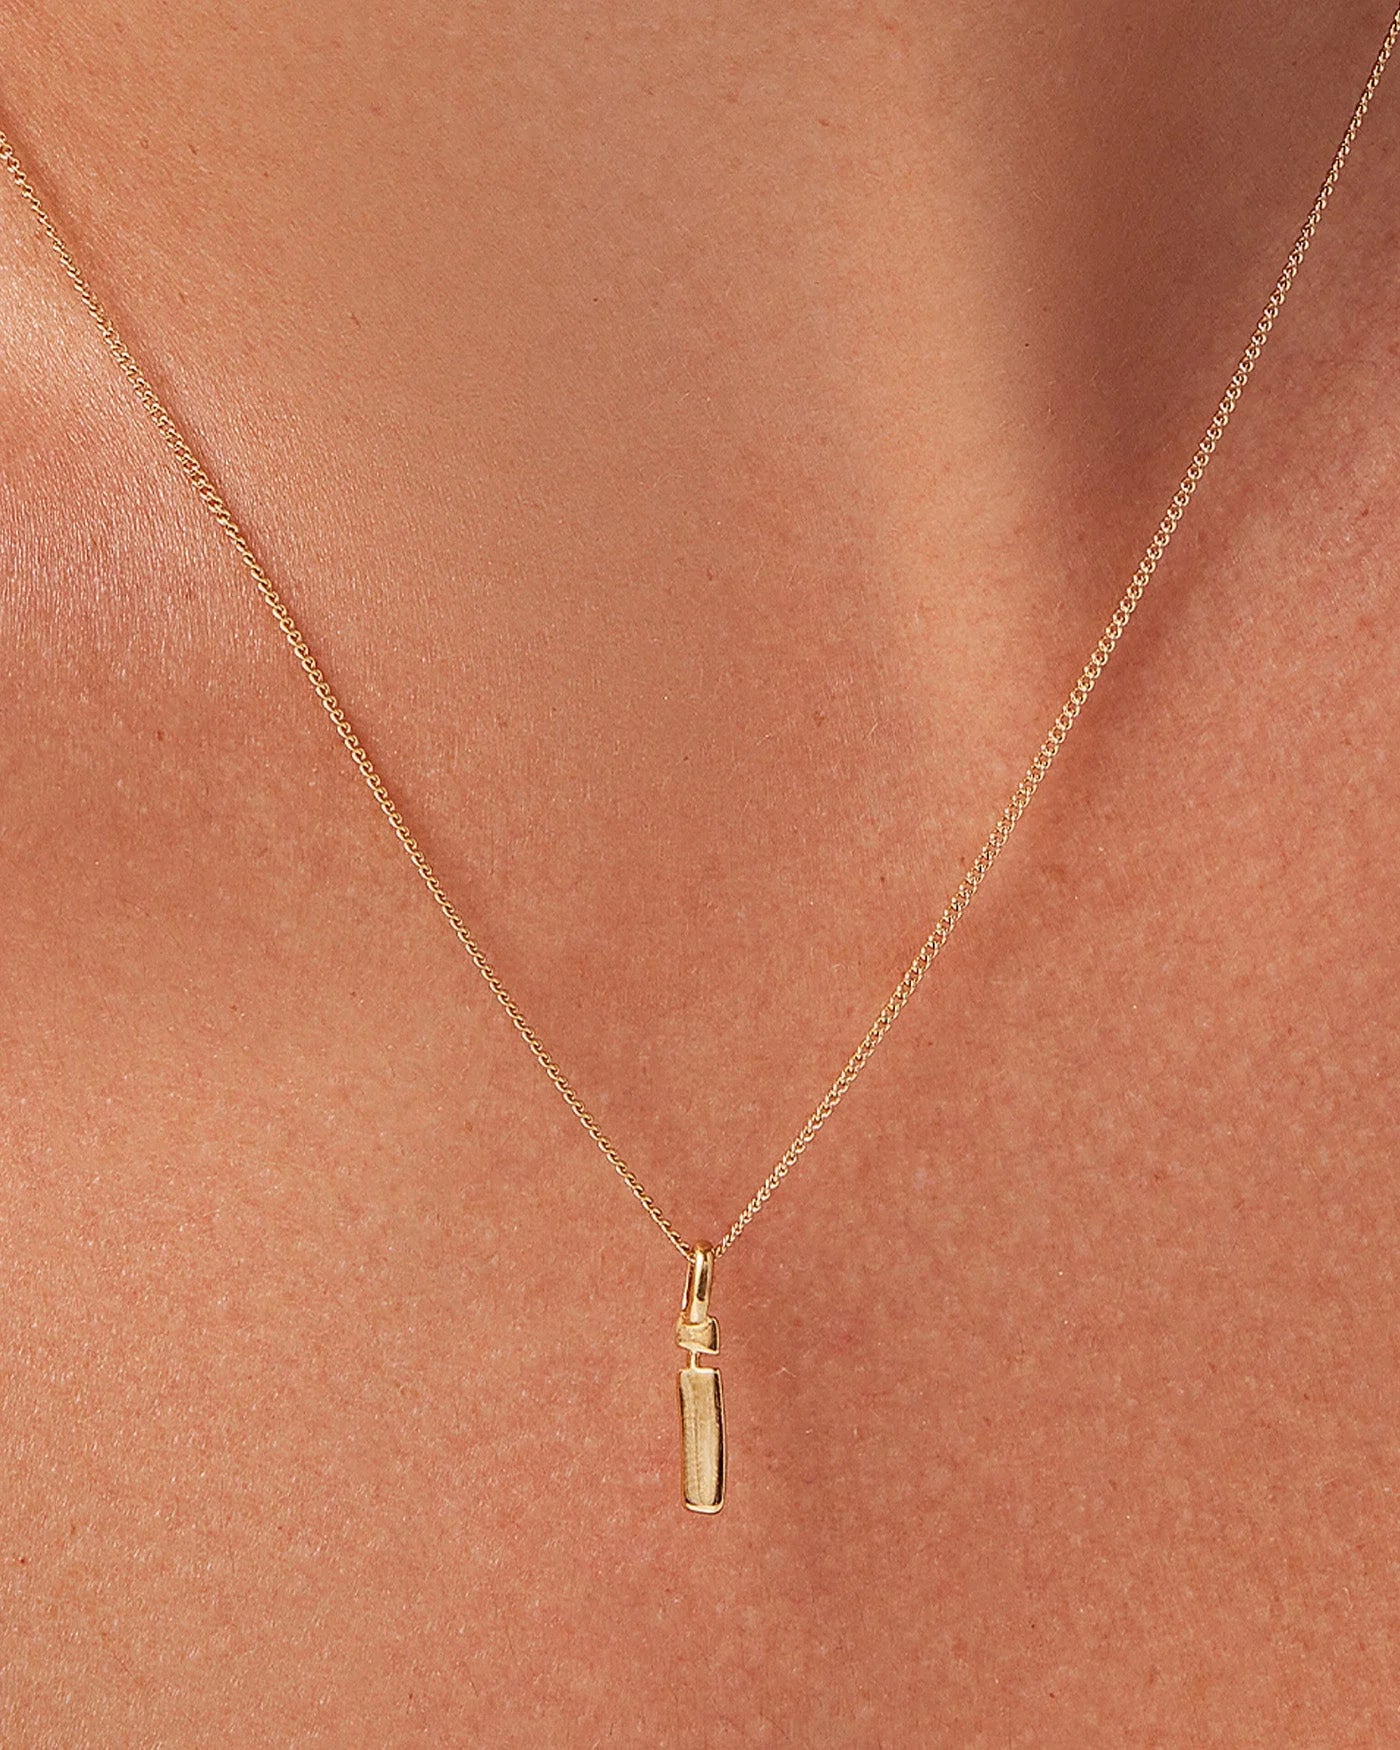 Monogram Necklace in Gold - I